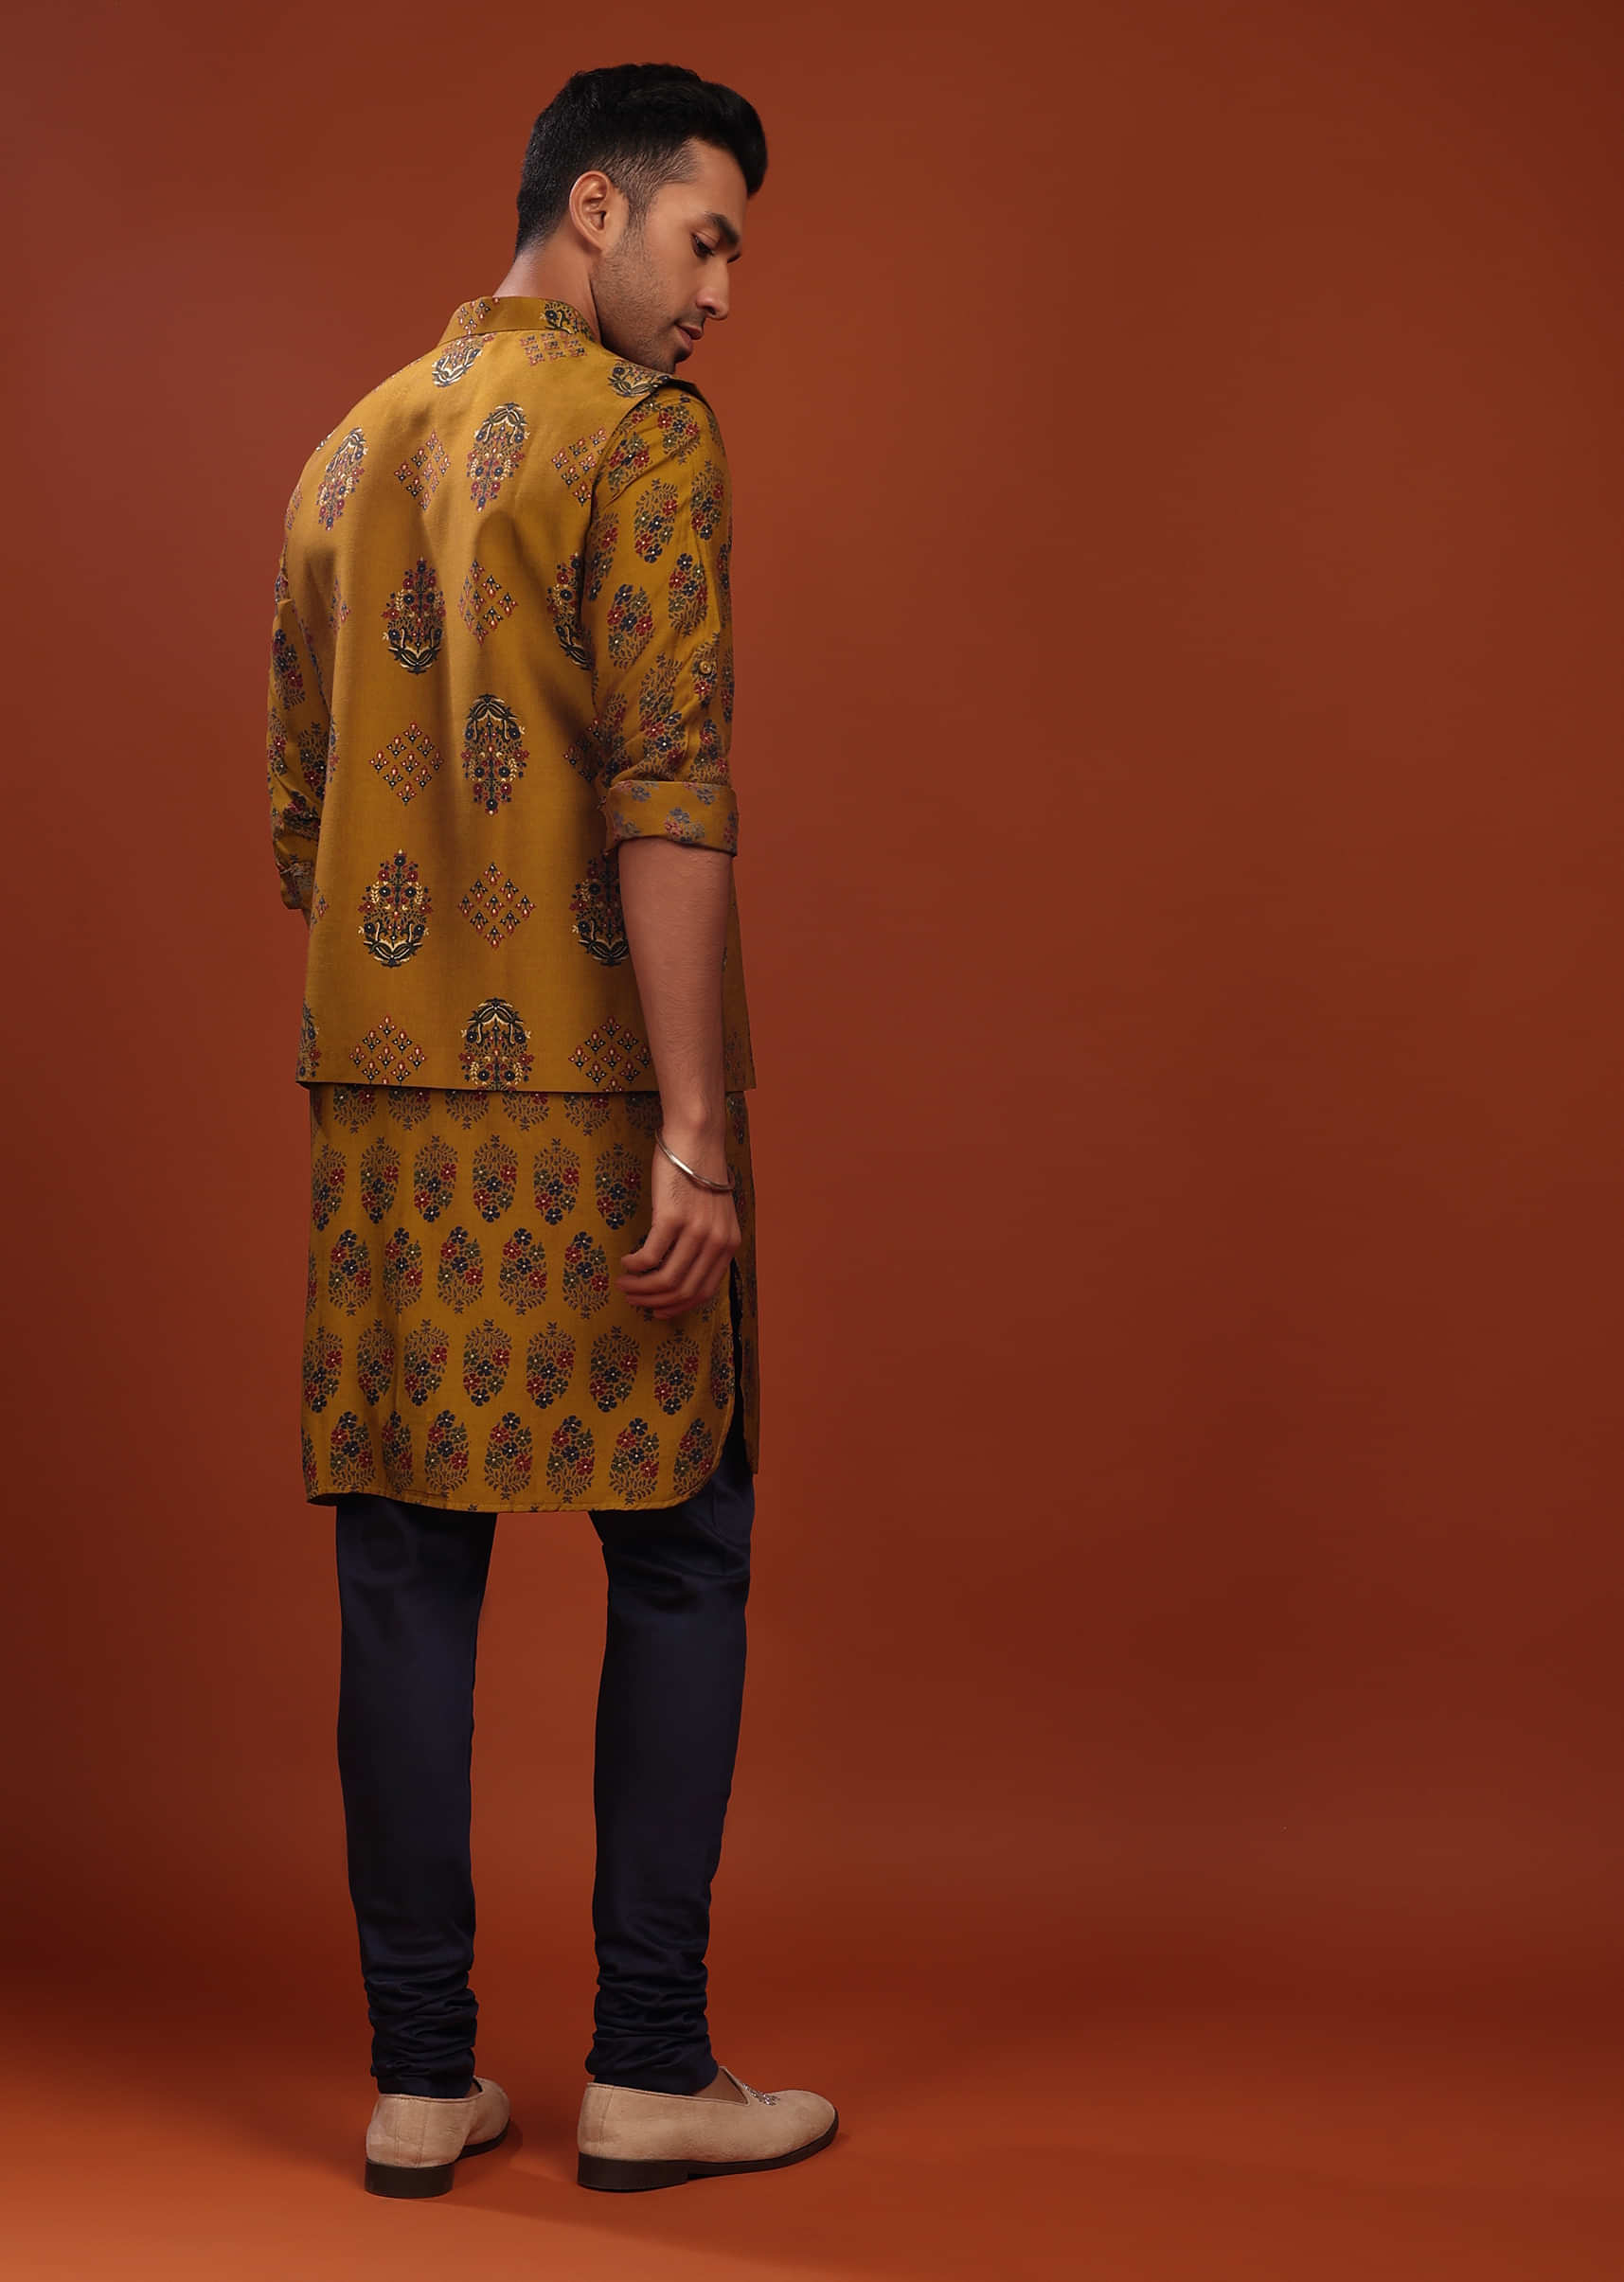 Ochre Gold Yellow Nehru Jacket And Kurta Set In Floral Motifs Print, Full Sleeves Kurta In Mandarin Collar Neckline With Full Sleeves